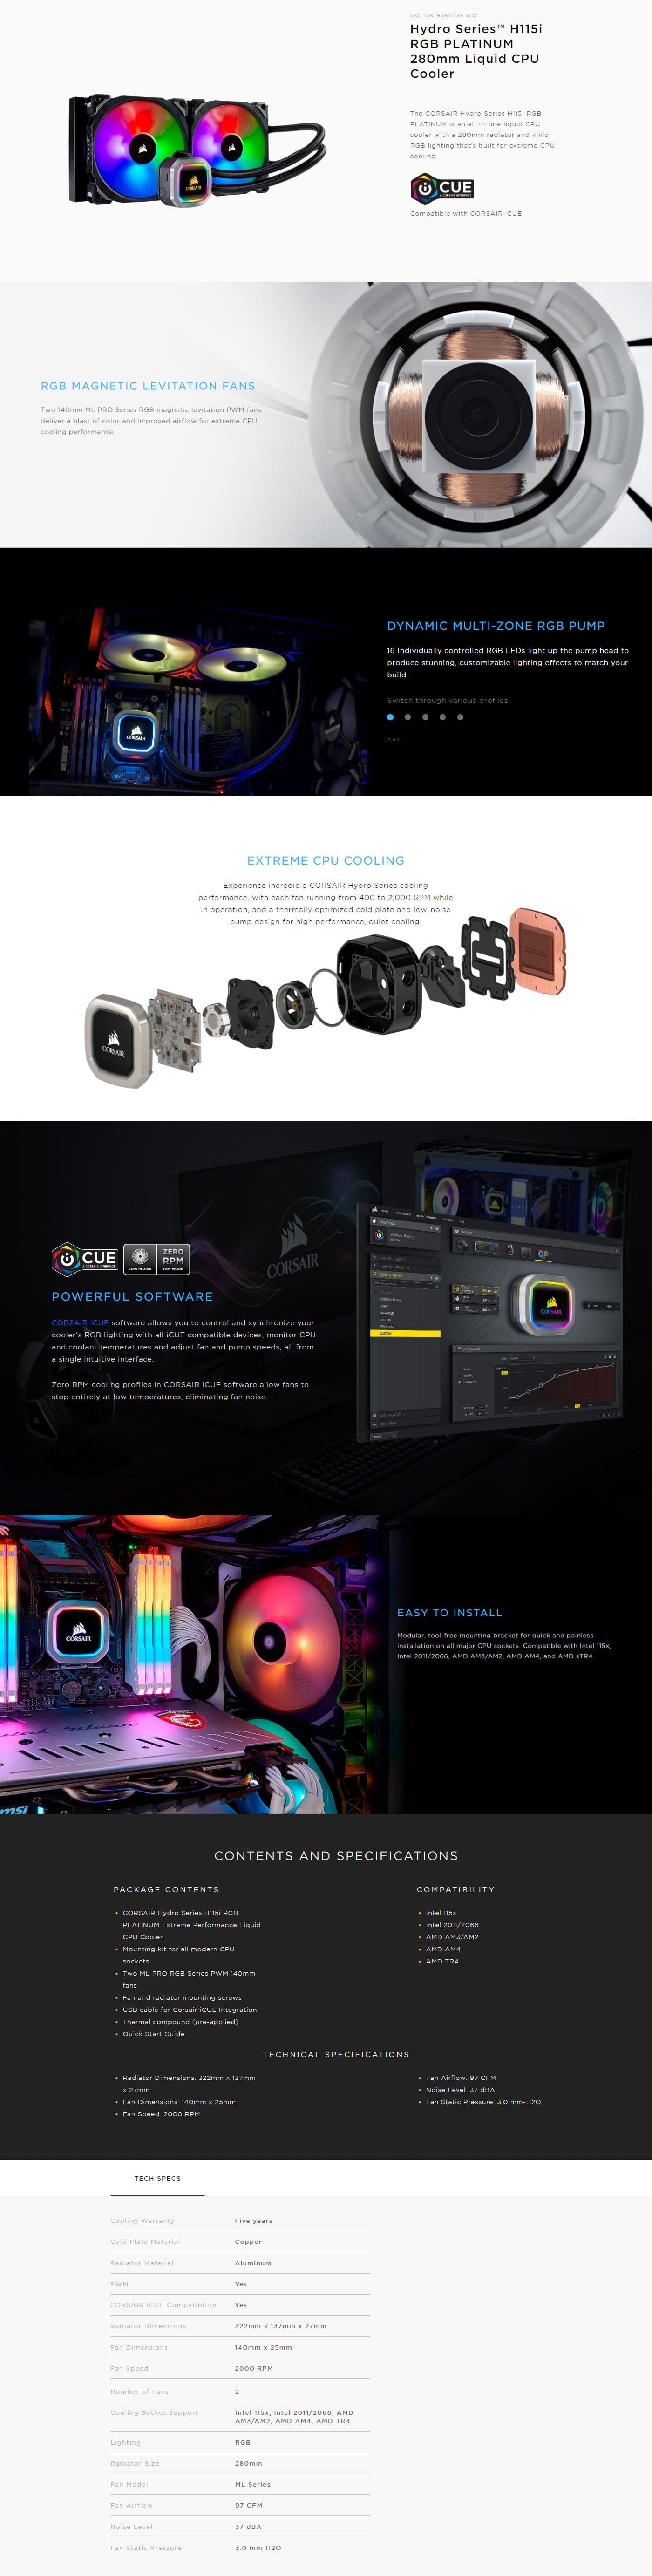  Buy Online Corsair Hydro Series H115i RGB Platinum 280mm Liquid CPU Cooler (CW-9060038-WW)